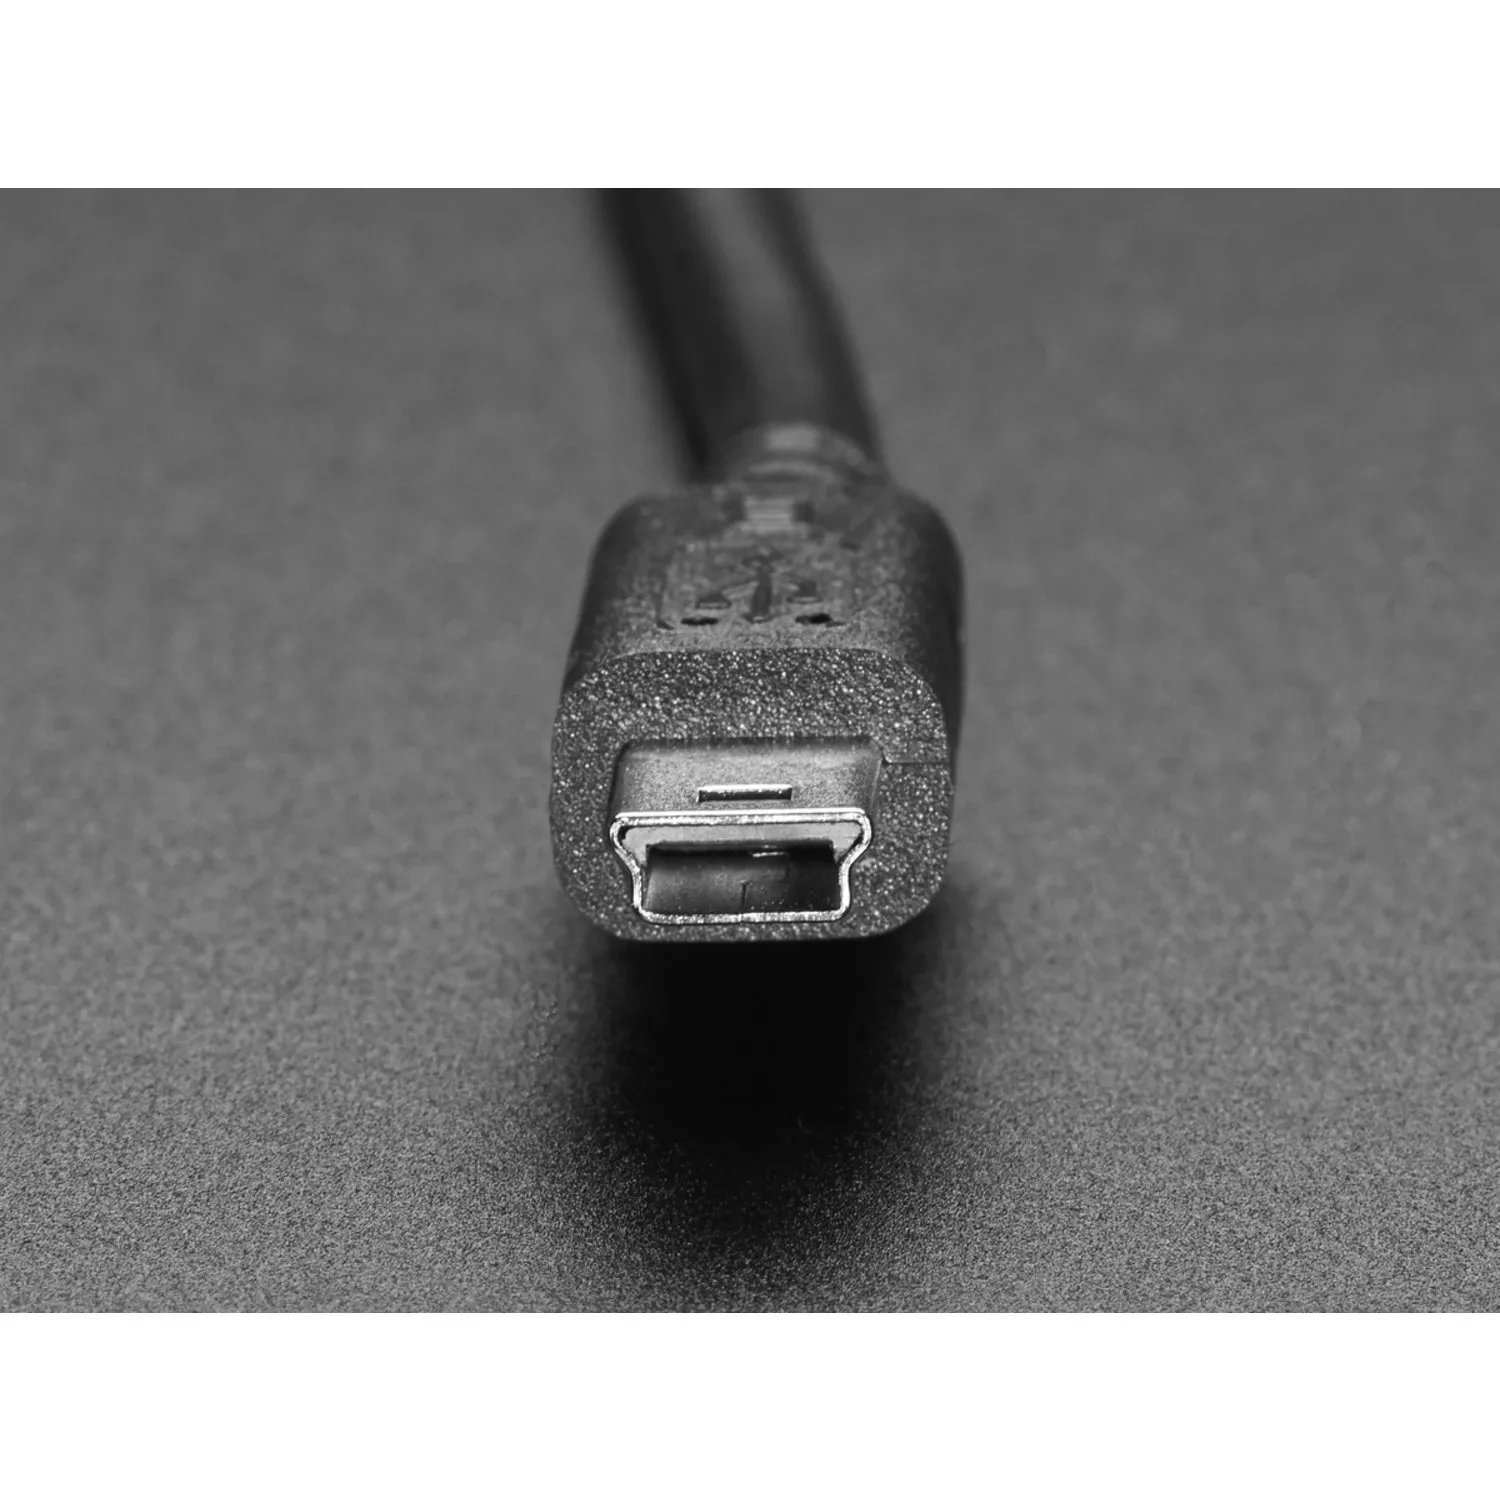 Photo of Panel Mount Extension USB Cable - Mini B Male to Mini B Female